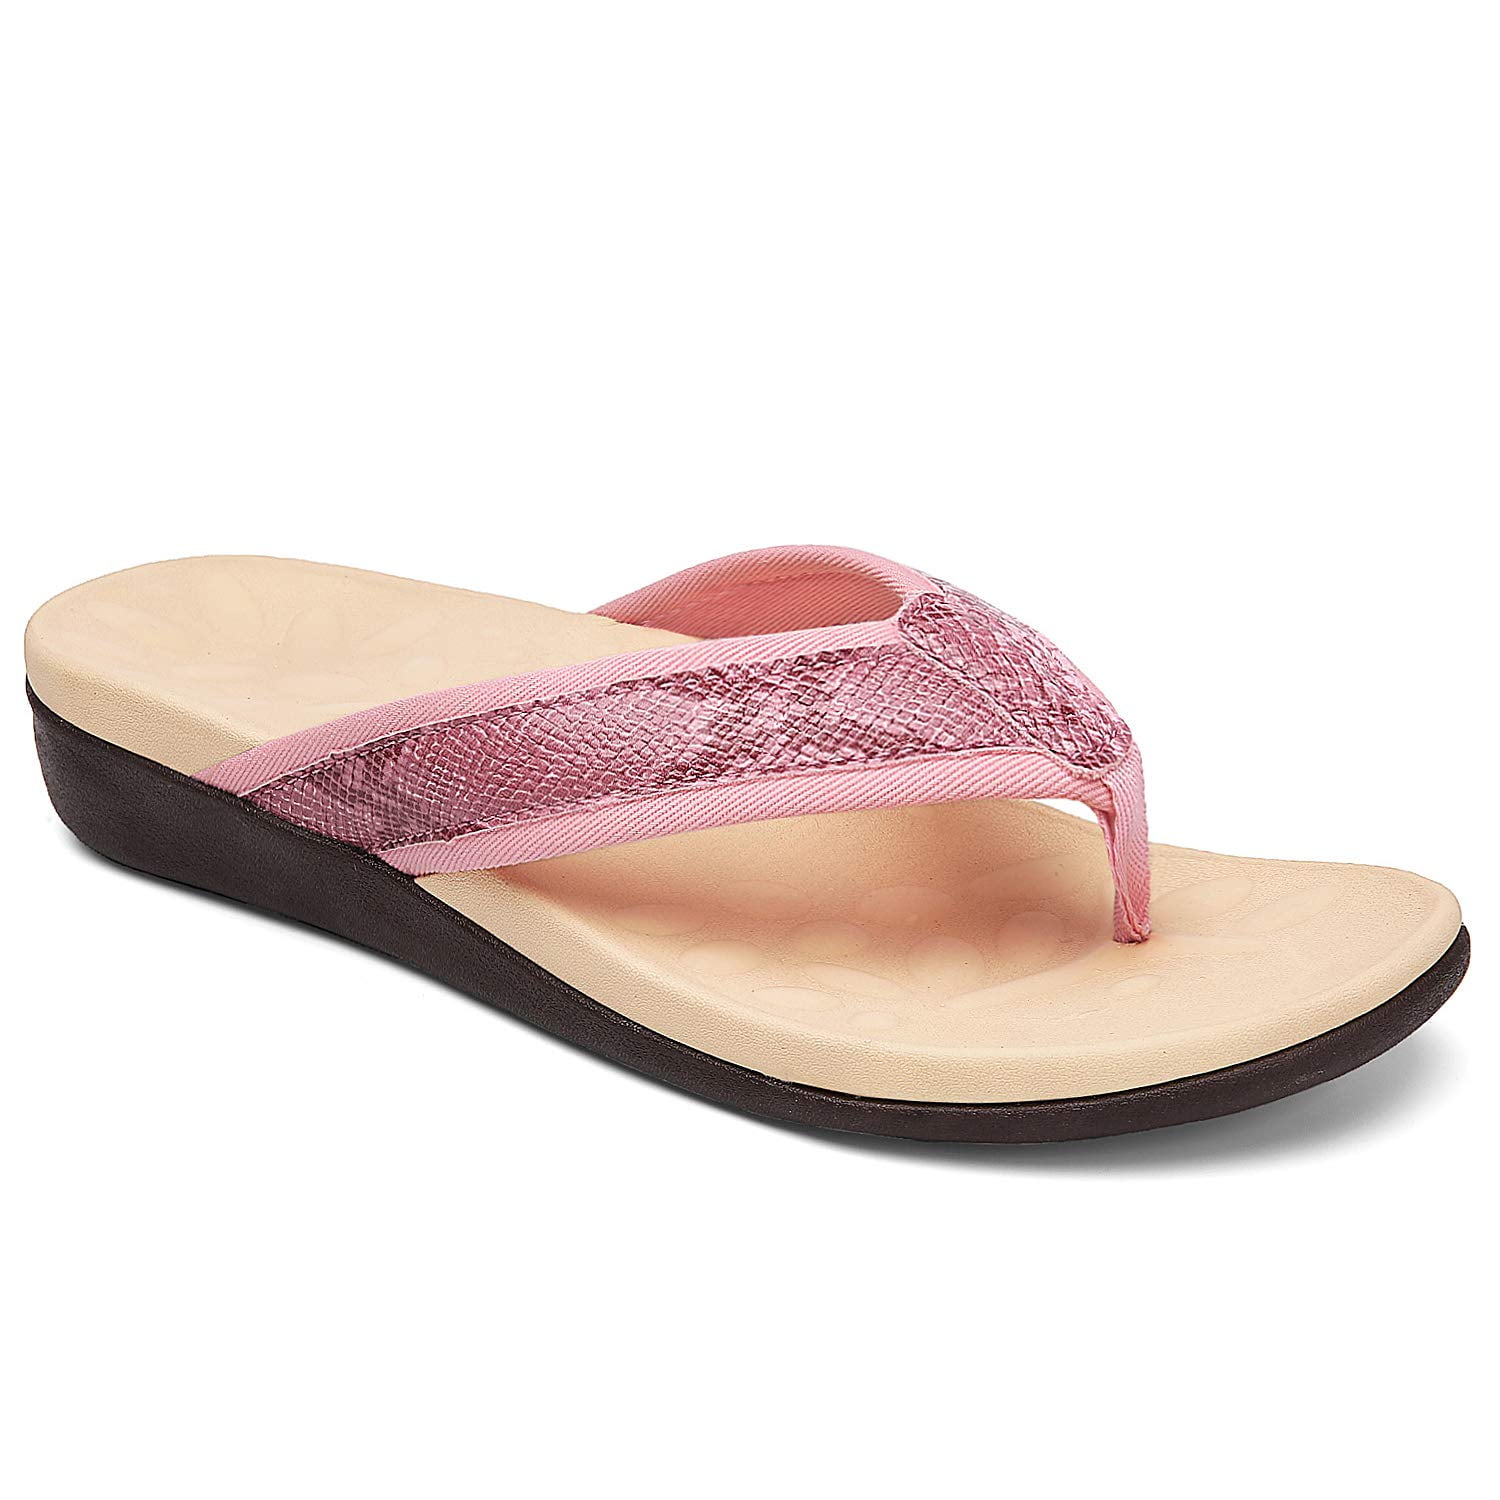 MEGNYA Orthotic Flip Flops For Women,Plantar Fasciitis Sandals For Flat ...